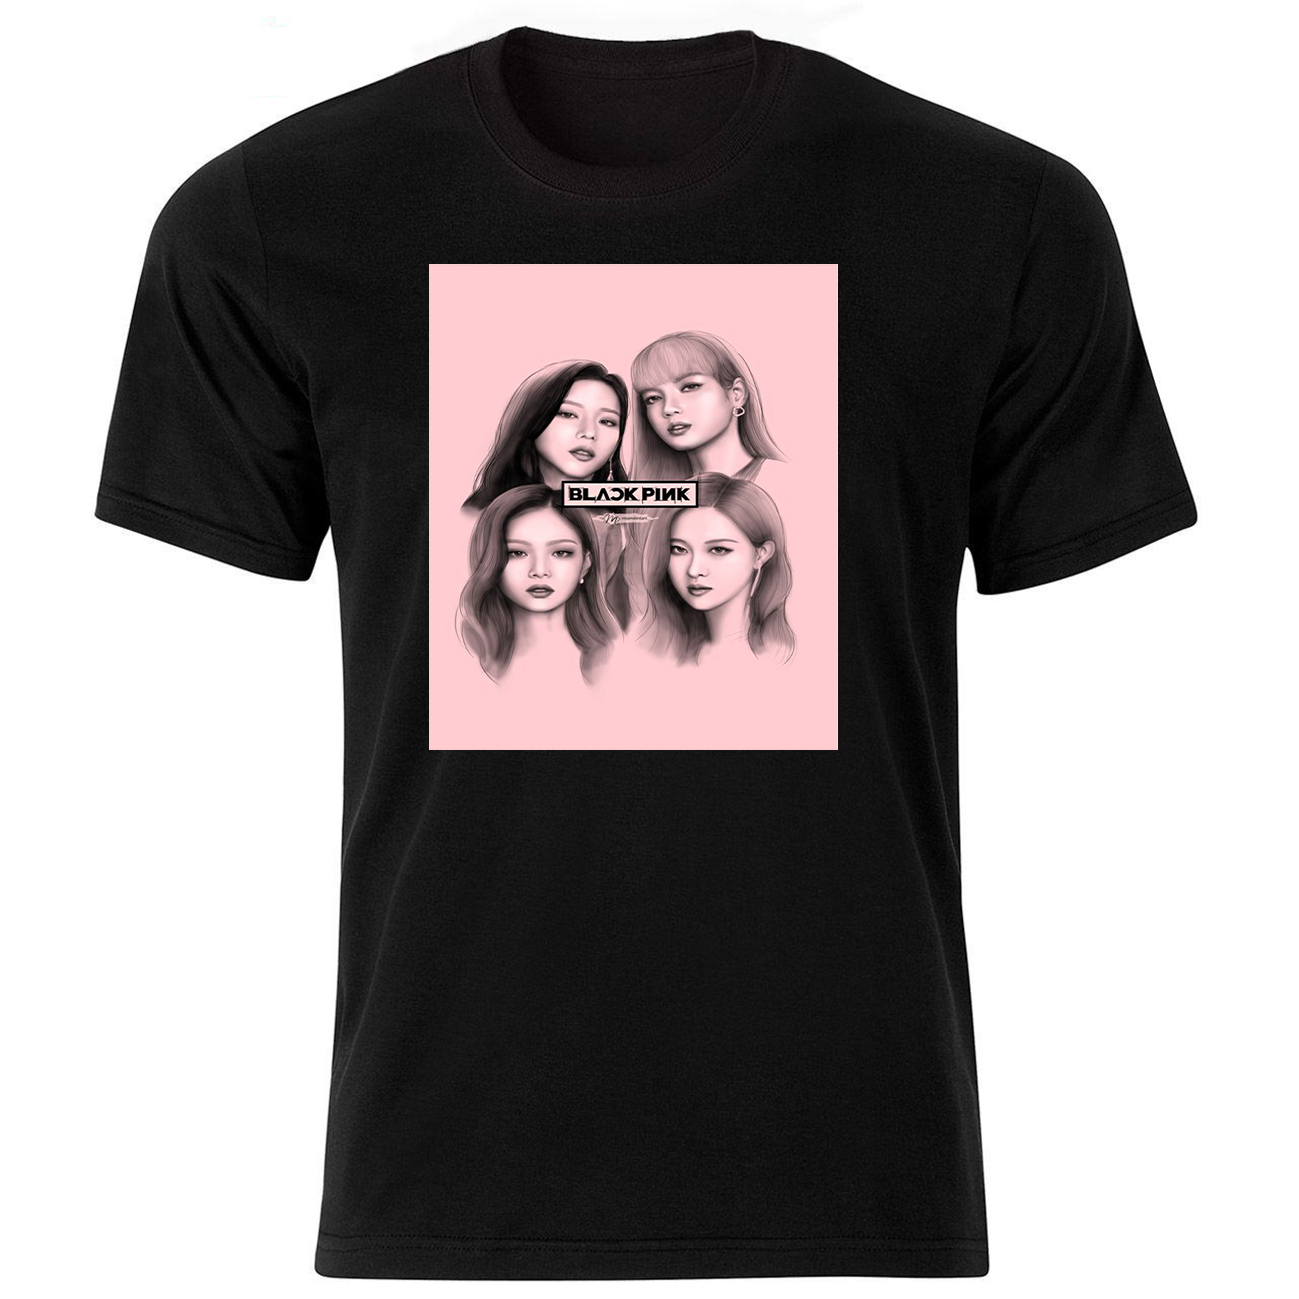 تی شرت دخترانه طرح بلک پینک کد 130